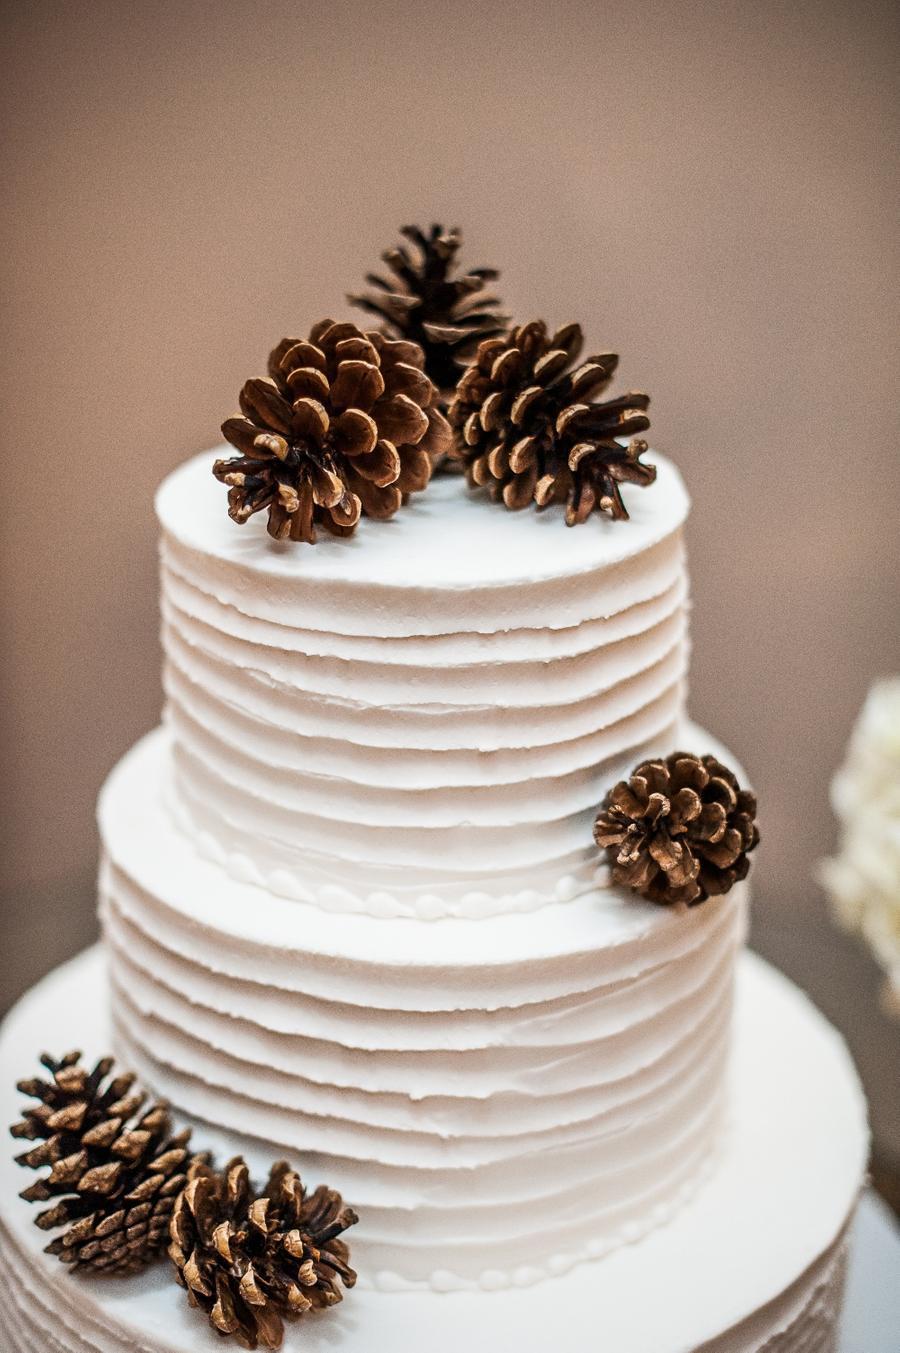 Textured simple wedding cake with pinecones